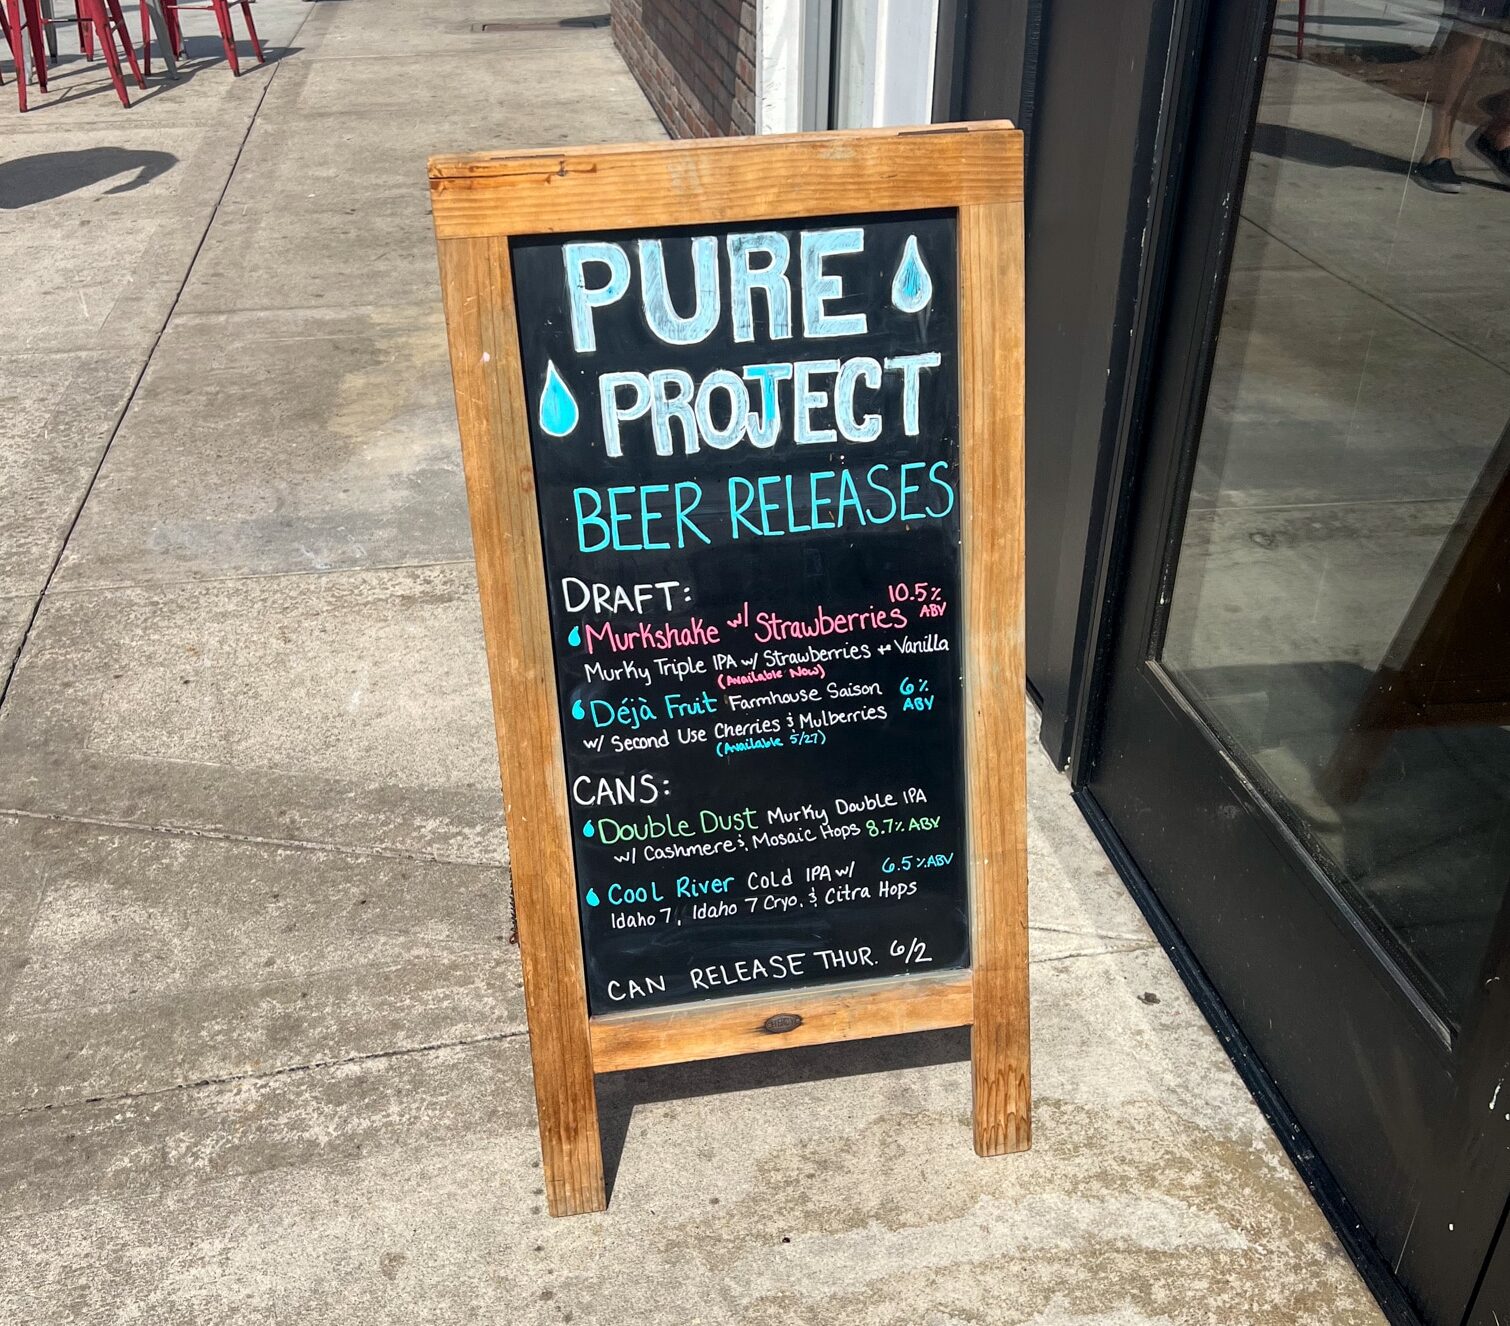 Pure Project - Carlsbad, CA